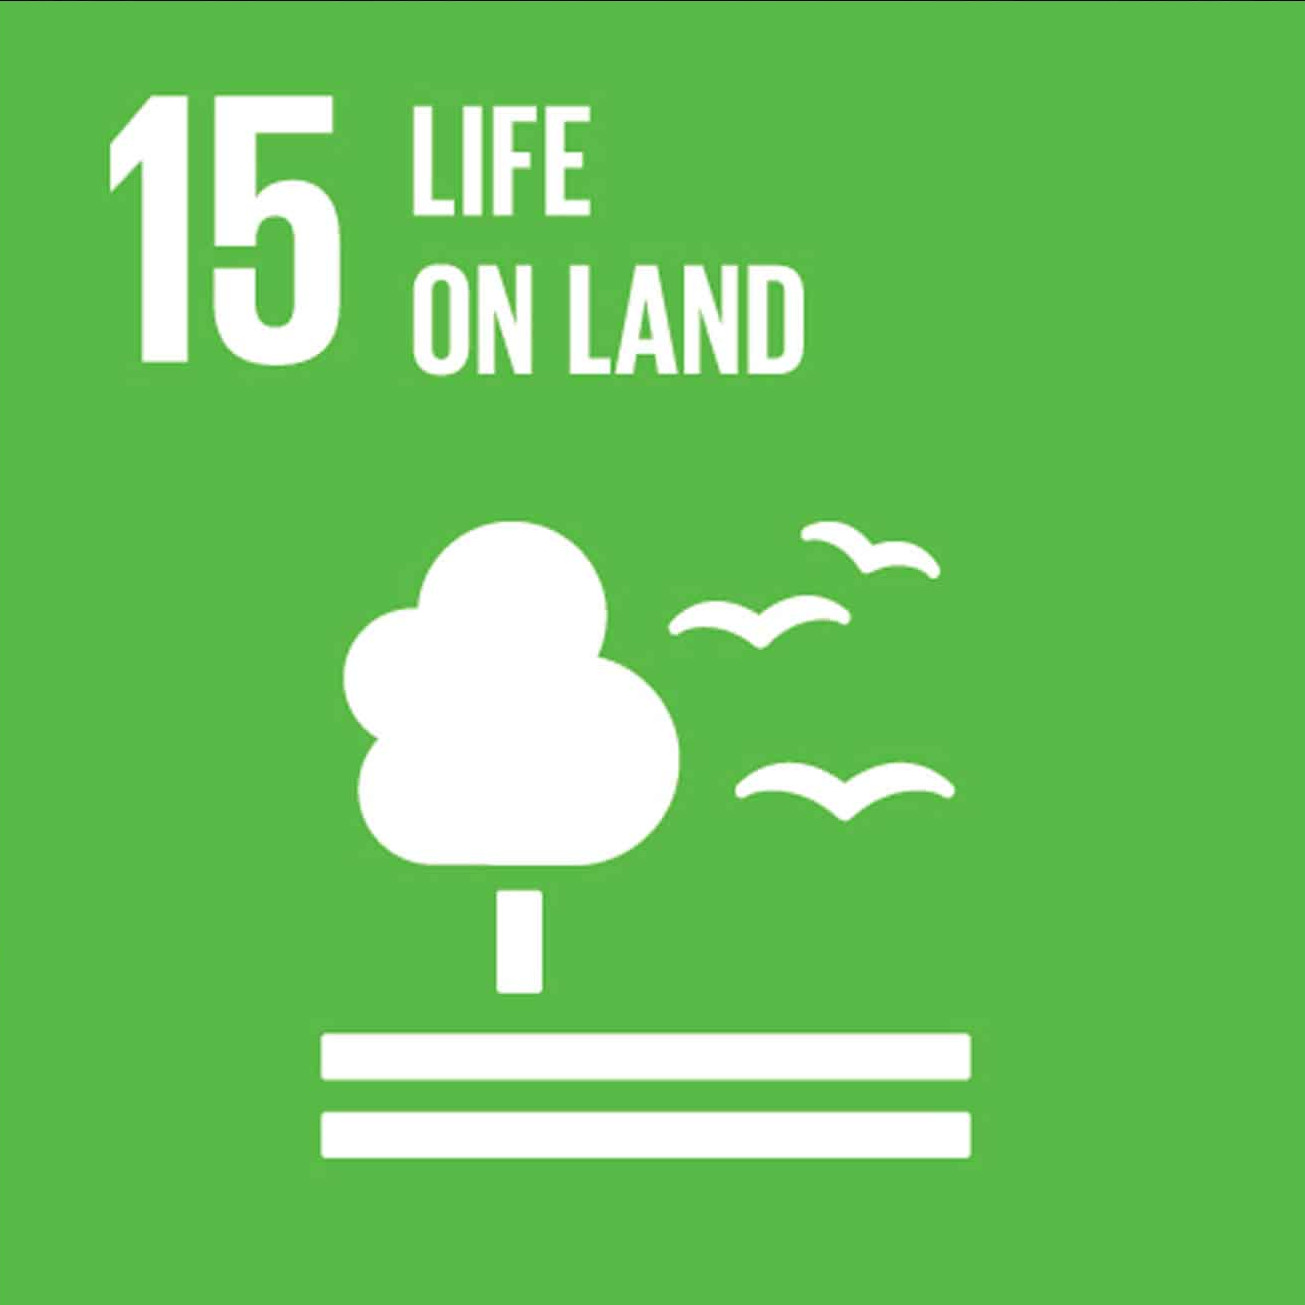 SDG 15 - Life on Land